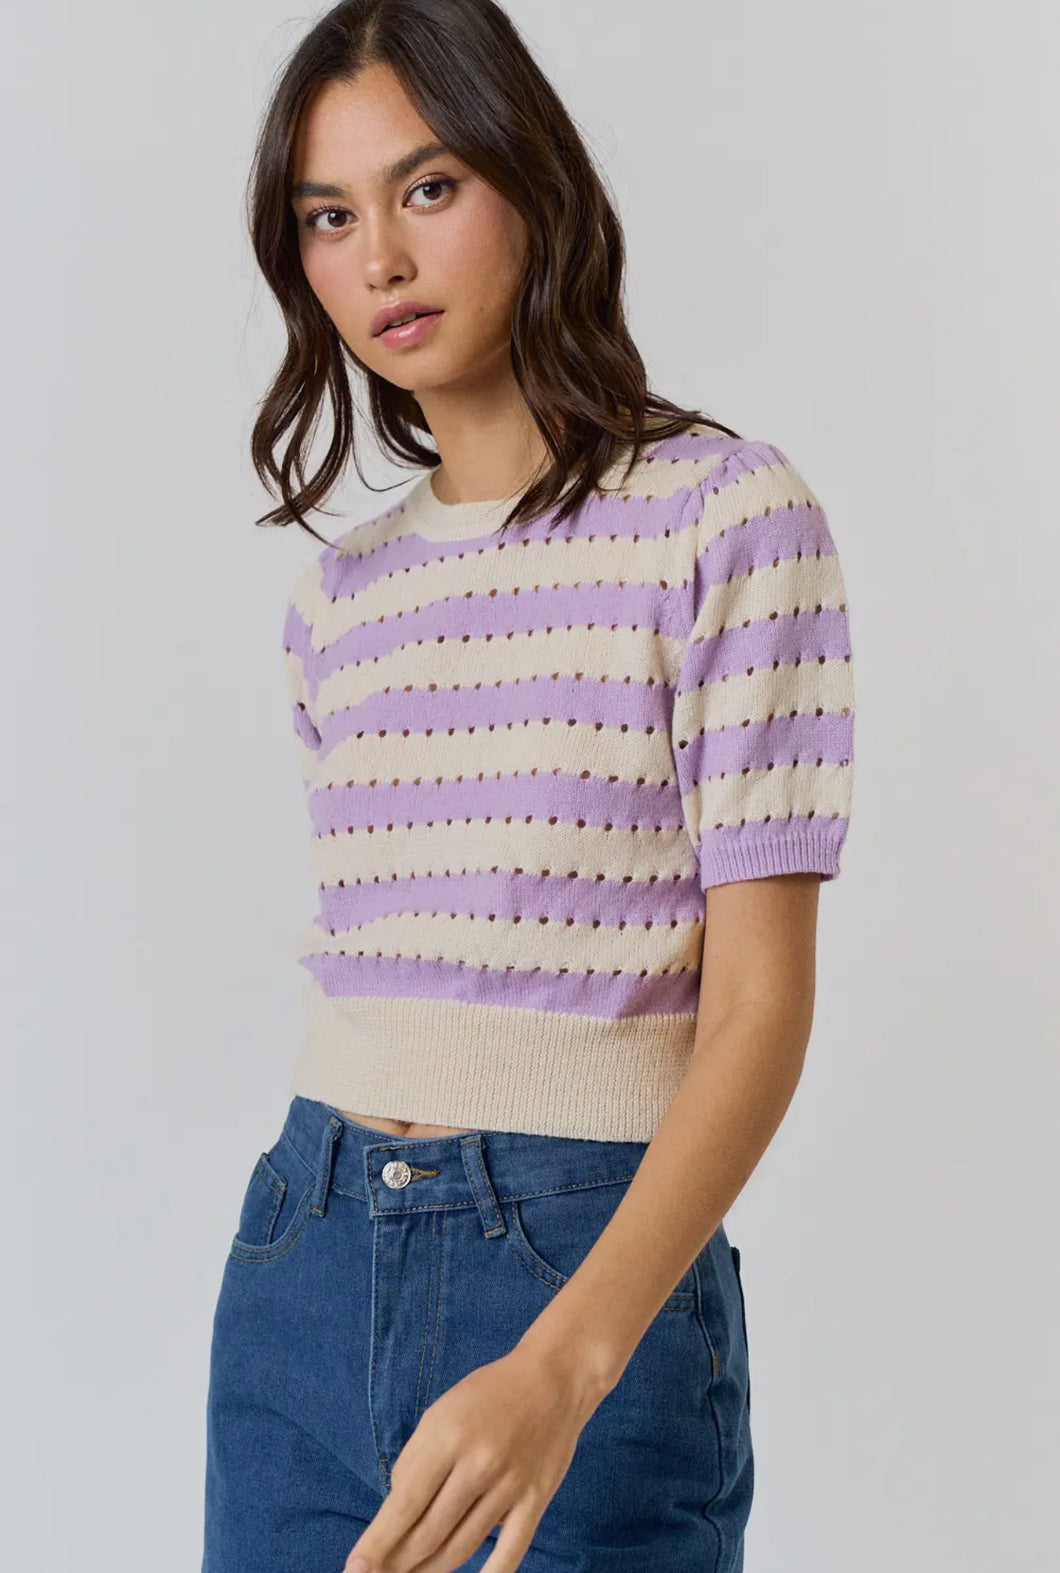 Kenzie Stripe Sweater Top